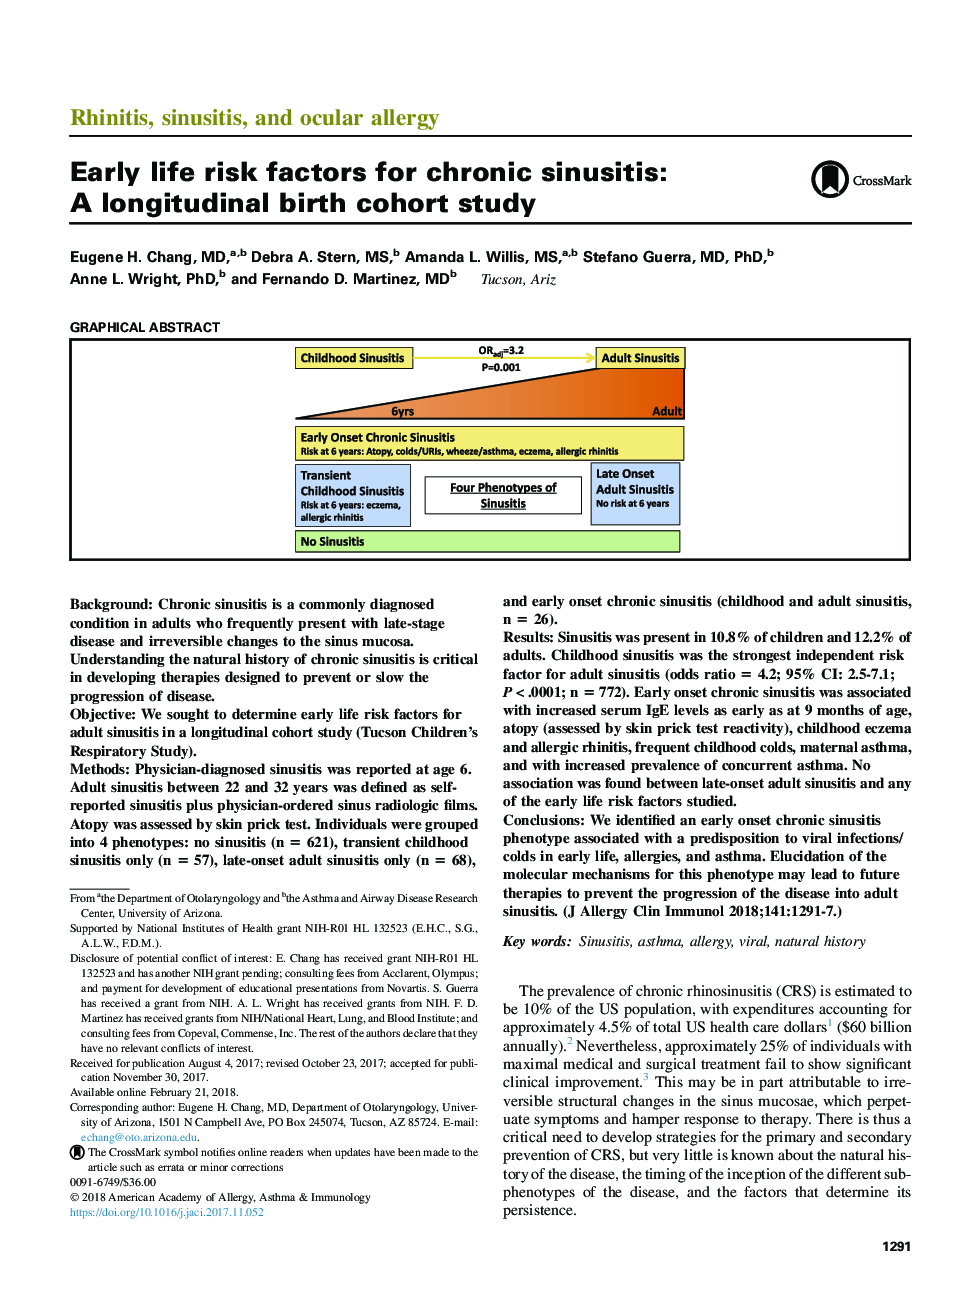 Early life risk factors for chronic sinusitis: AÂ longitudinal birth cohort study